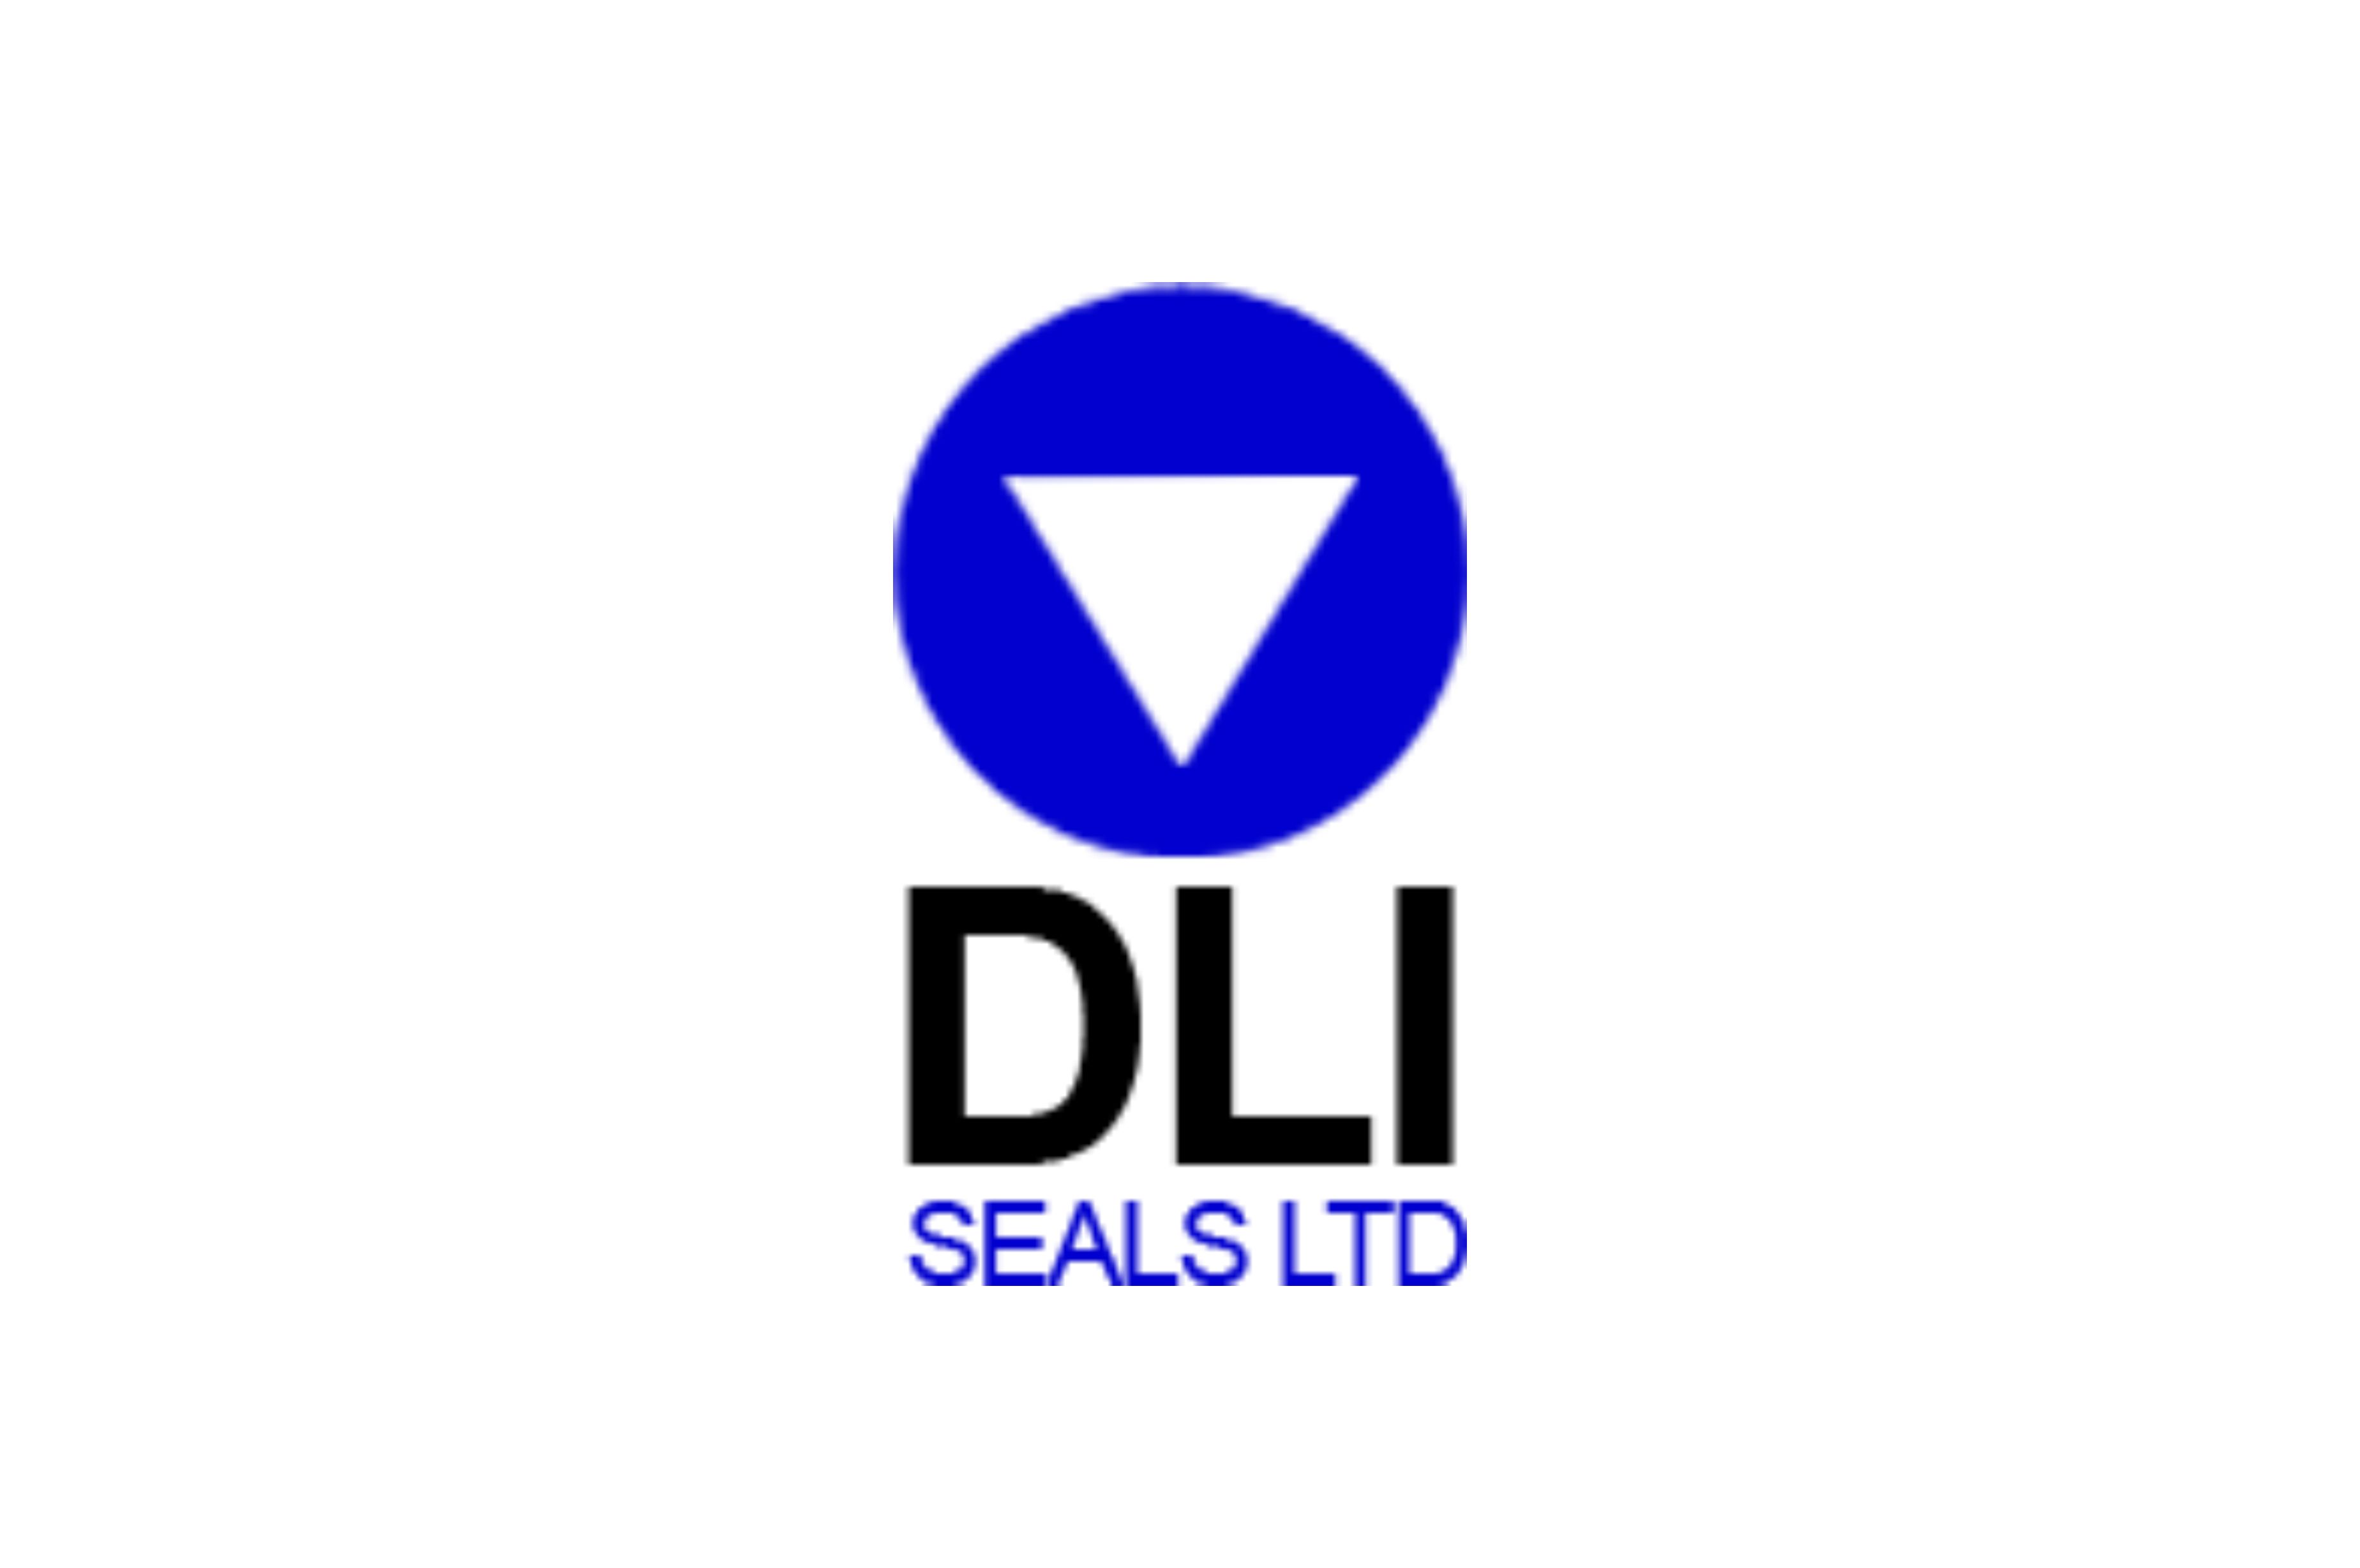 The brands DLI SEALS